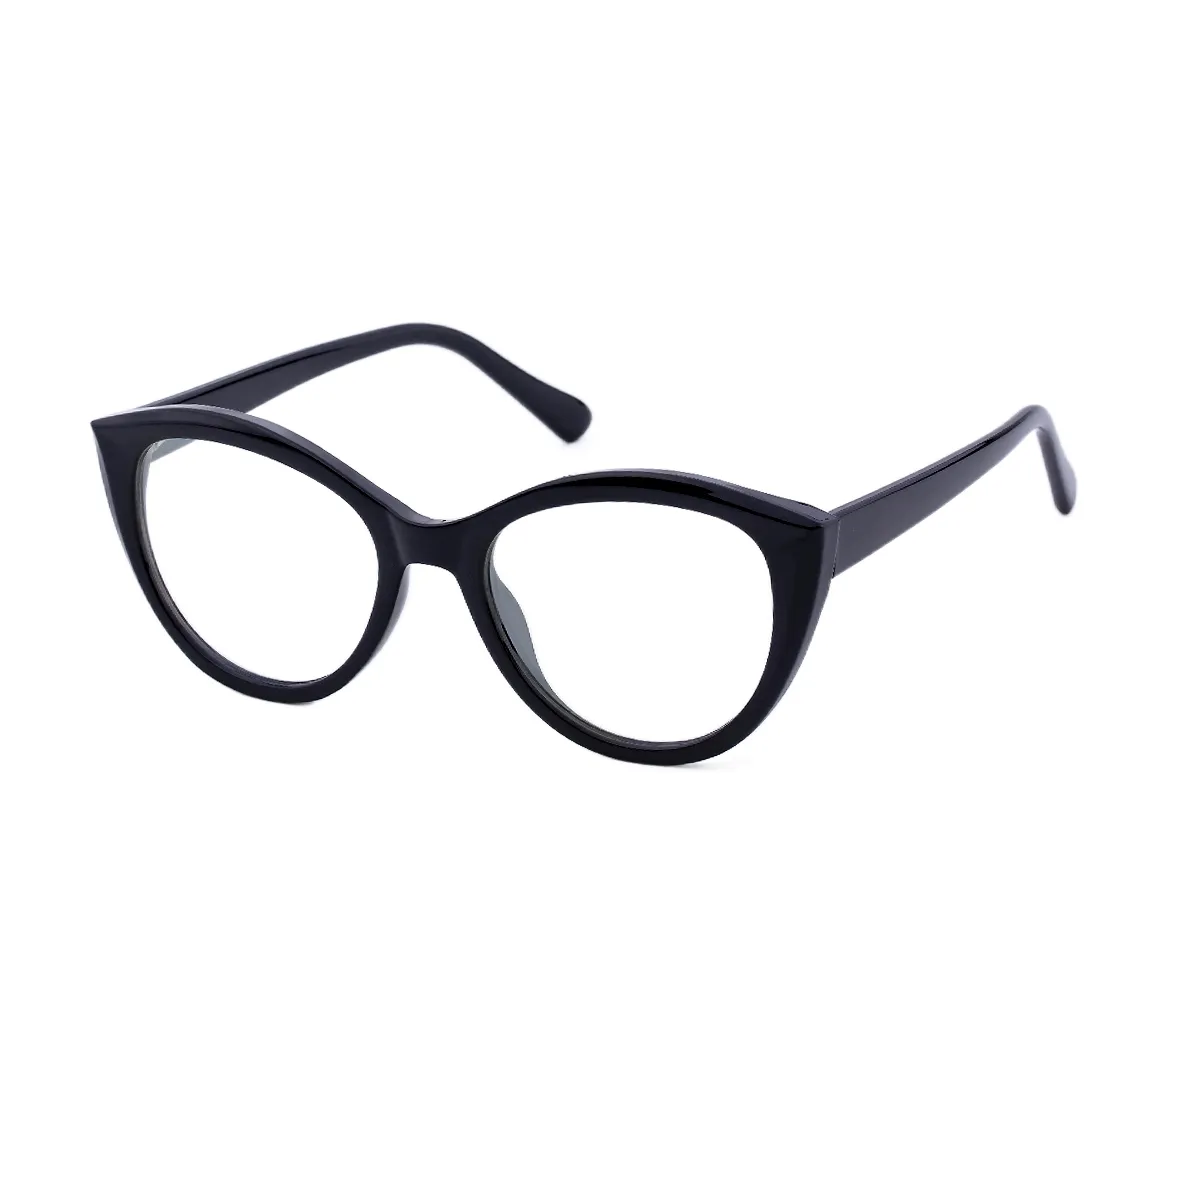 Griselda - Cat-eye Black Glasses for Women - EFE